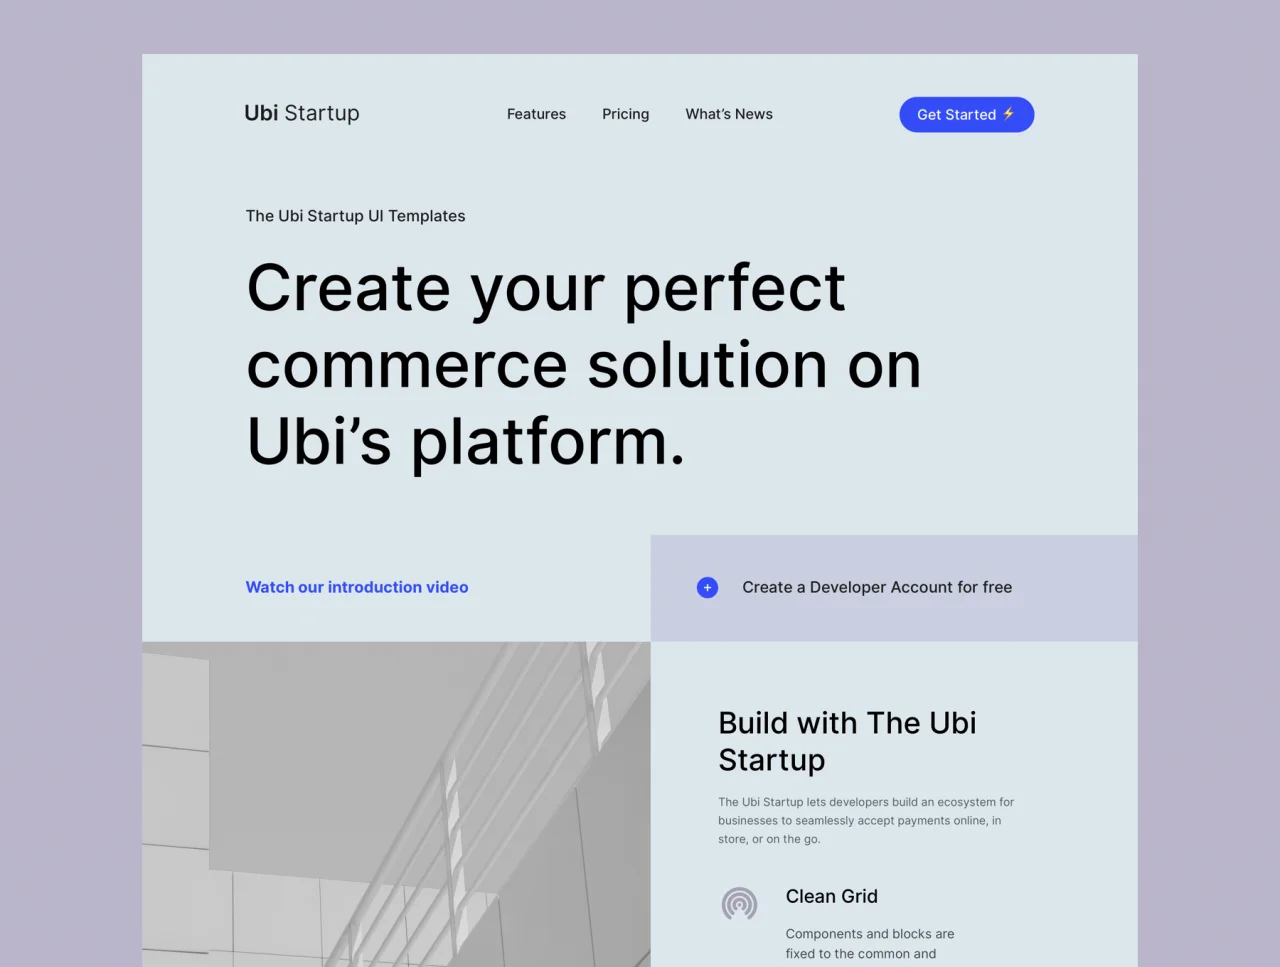 Ubi Startup Templates 2个现代典雅创意工作室网站设计模板集-ui套件、主页、介绍、列表、卡片式、引导页、海报、社交、网站-到位啦UI